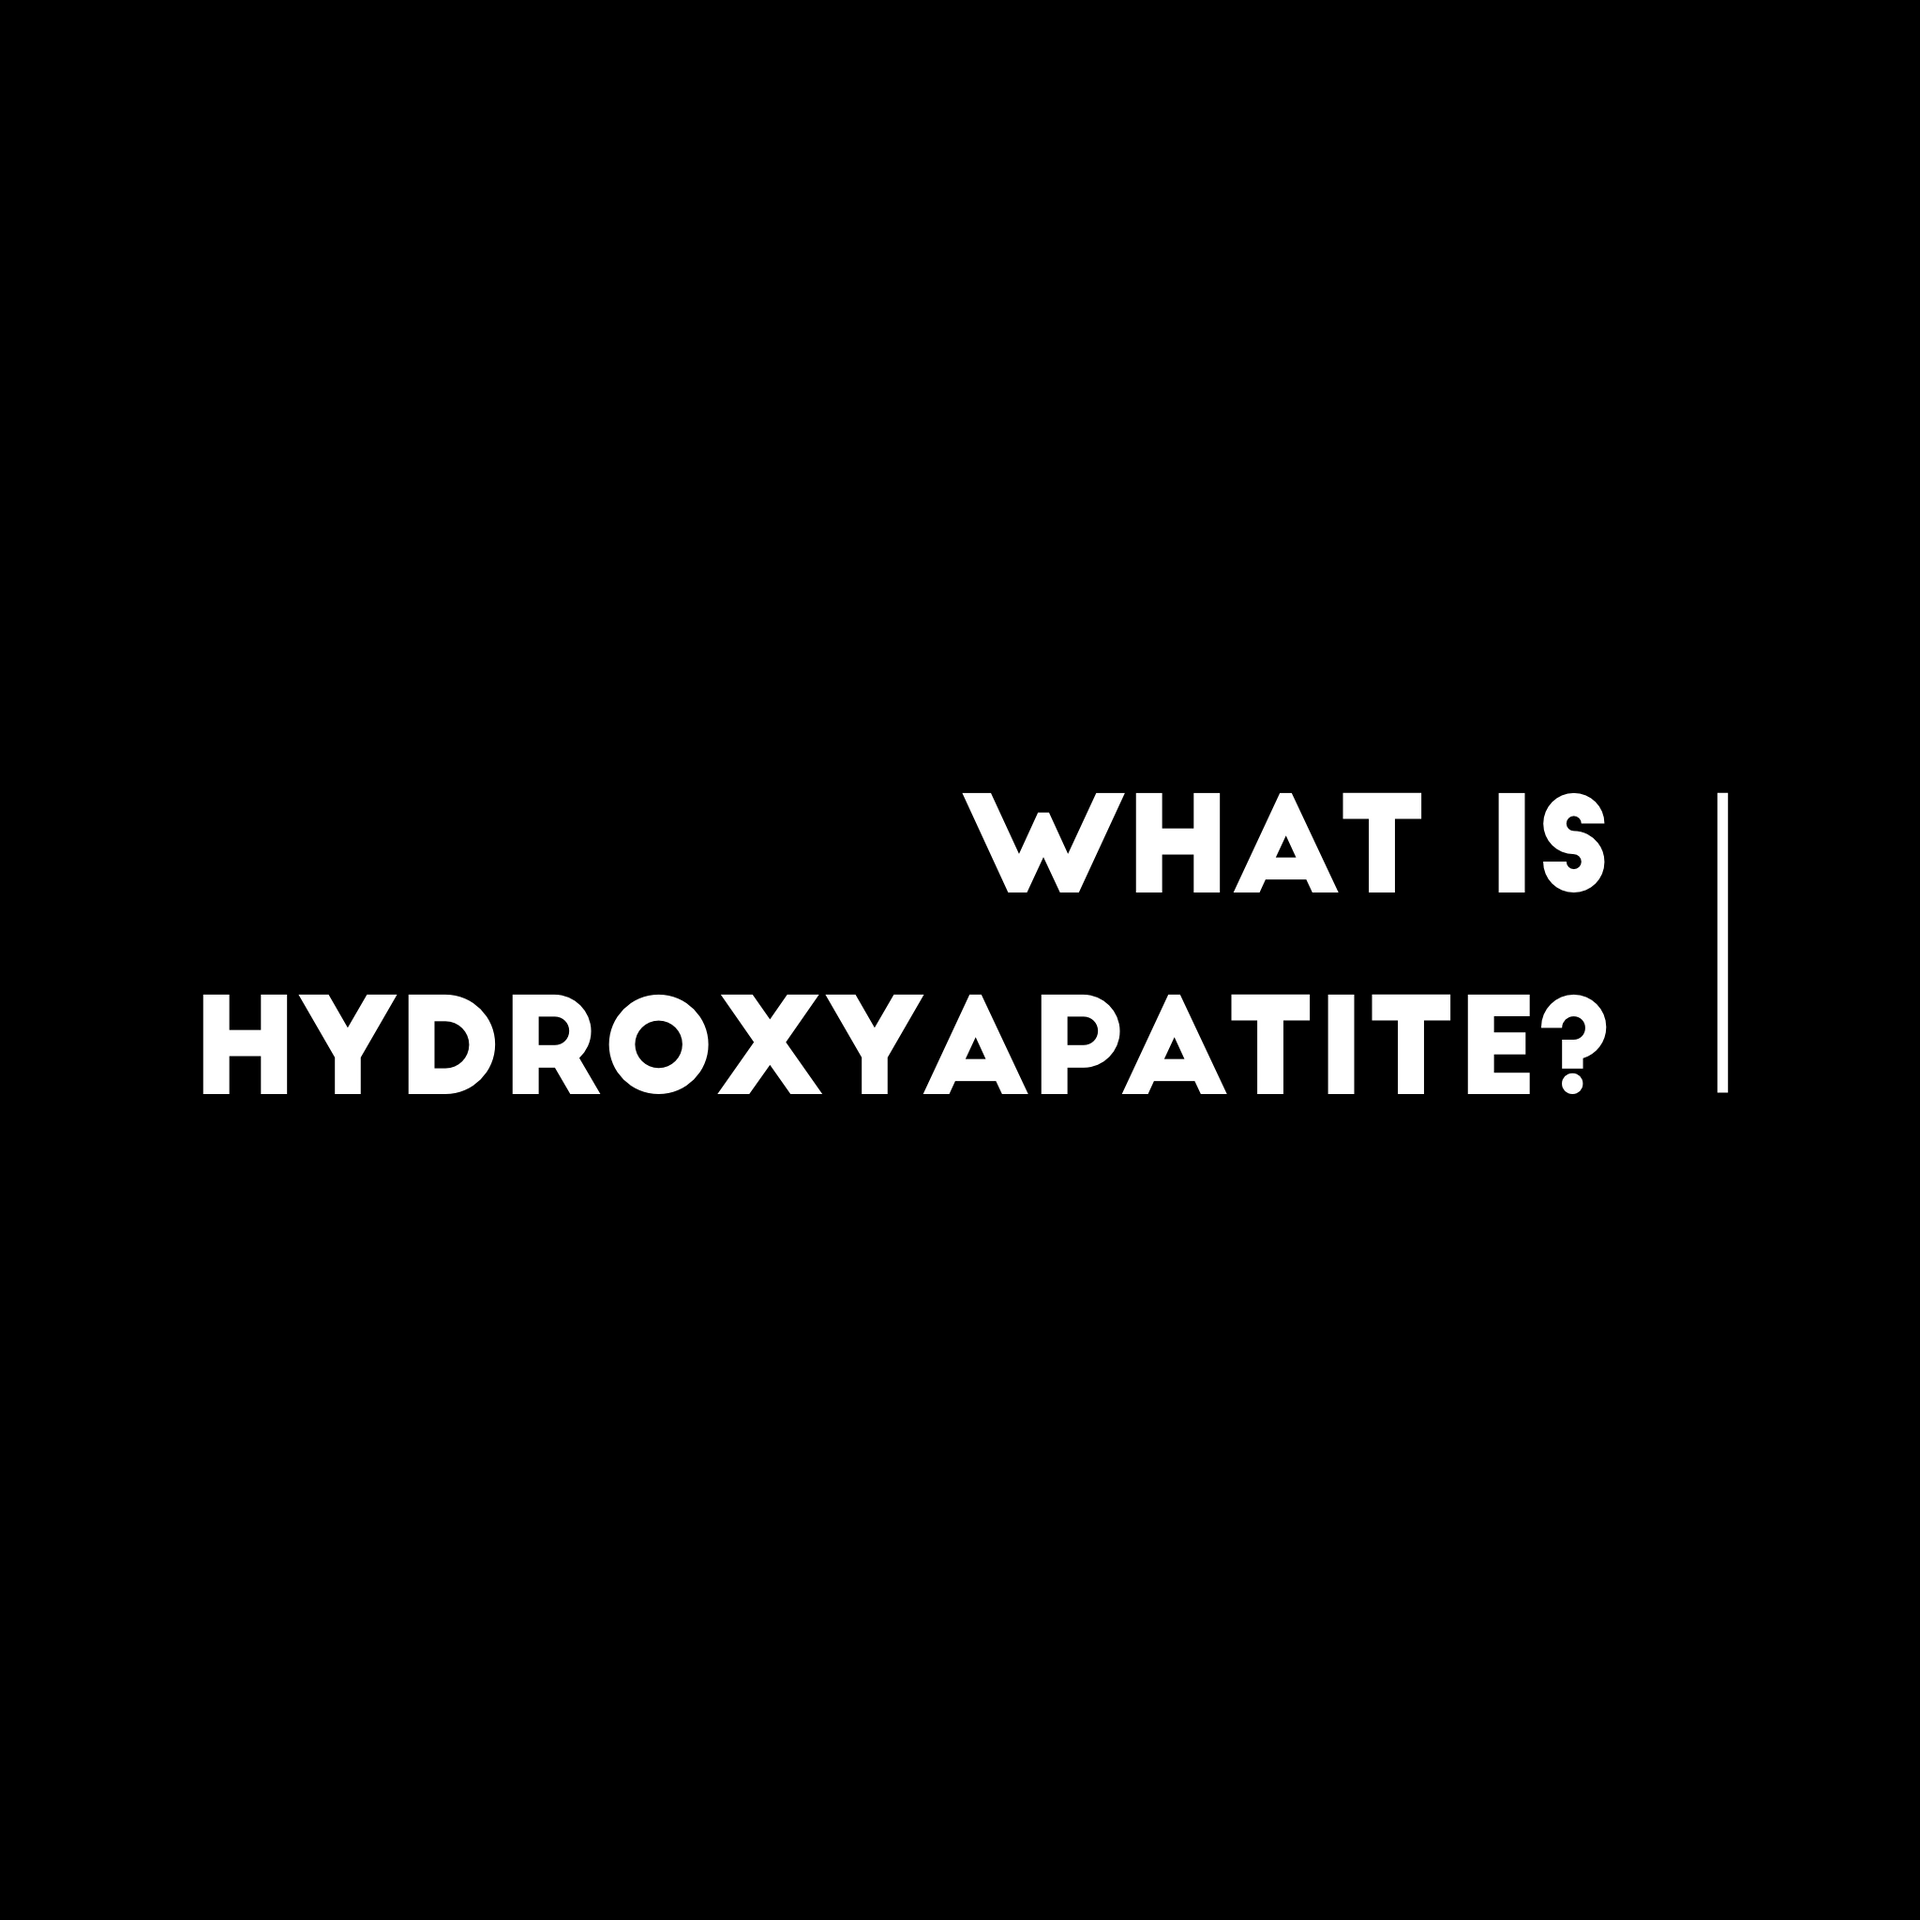 What is hydroxyapatite?